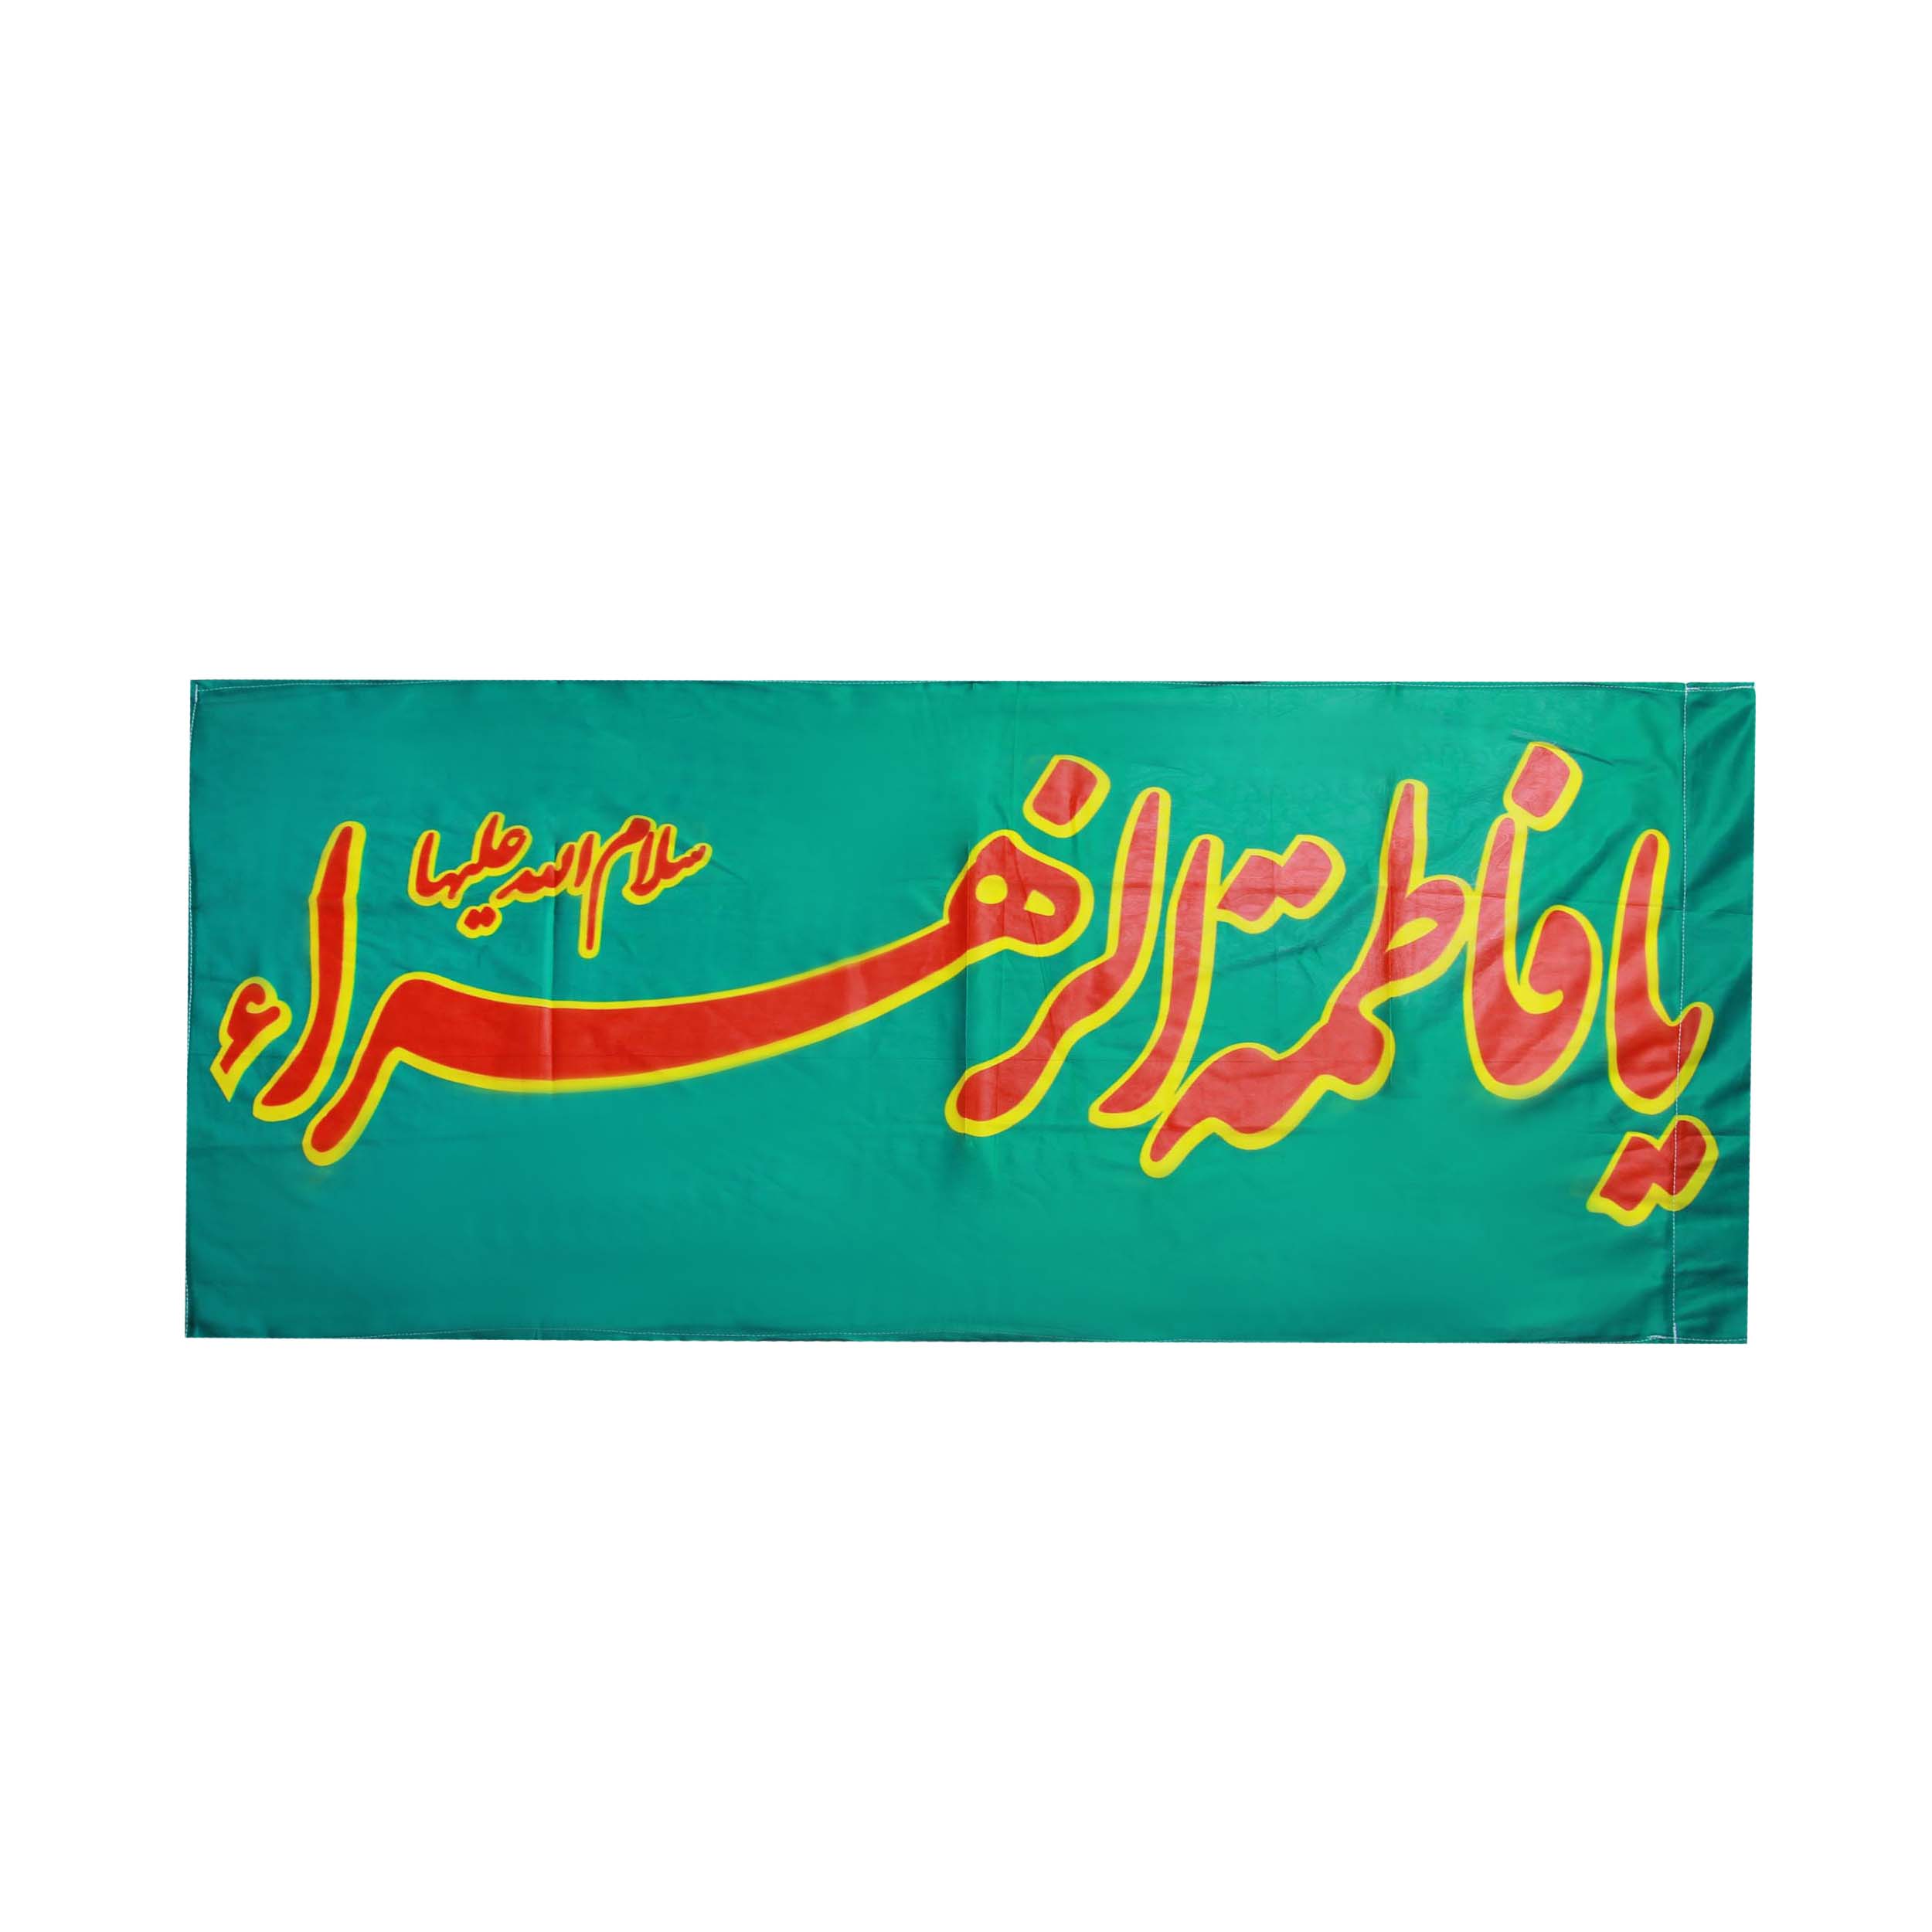  پرچم  بازرگانی میلادی طرح یا فاطمة الزهرا  کد PAR-117